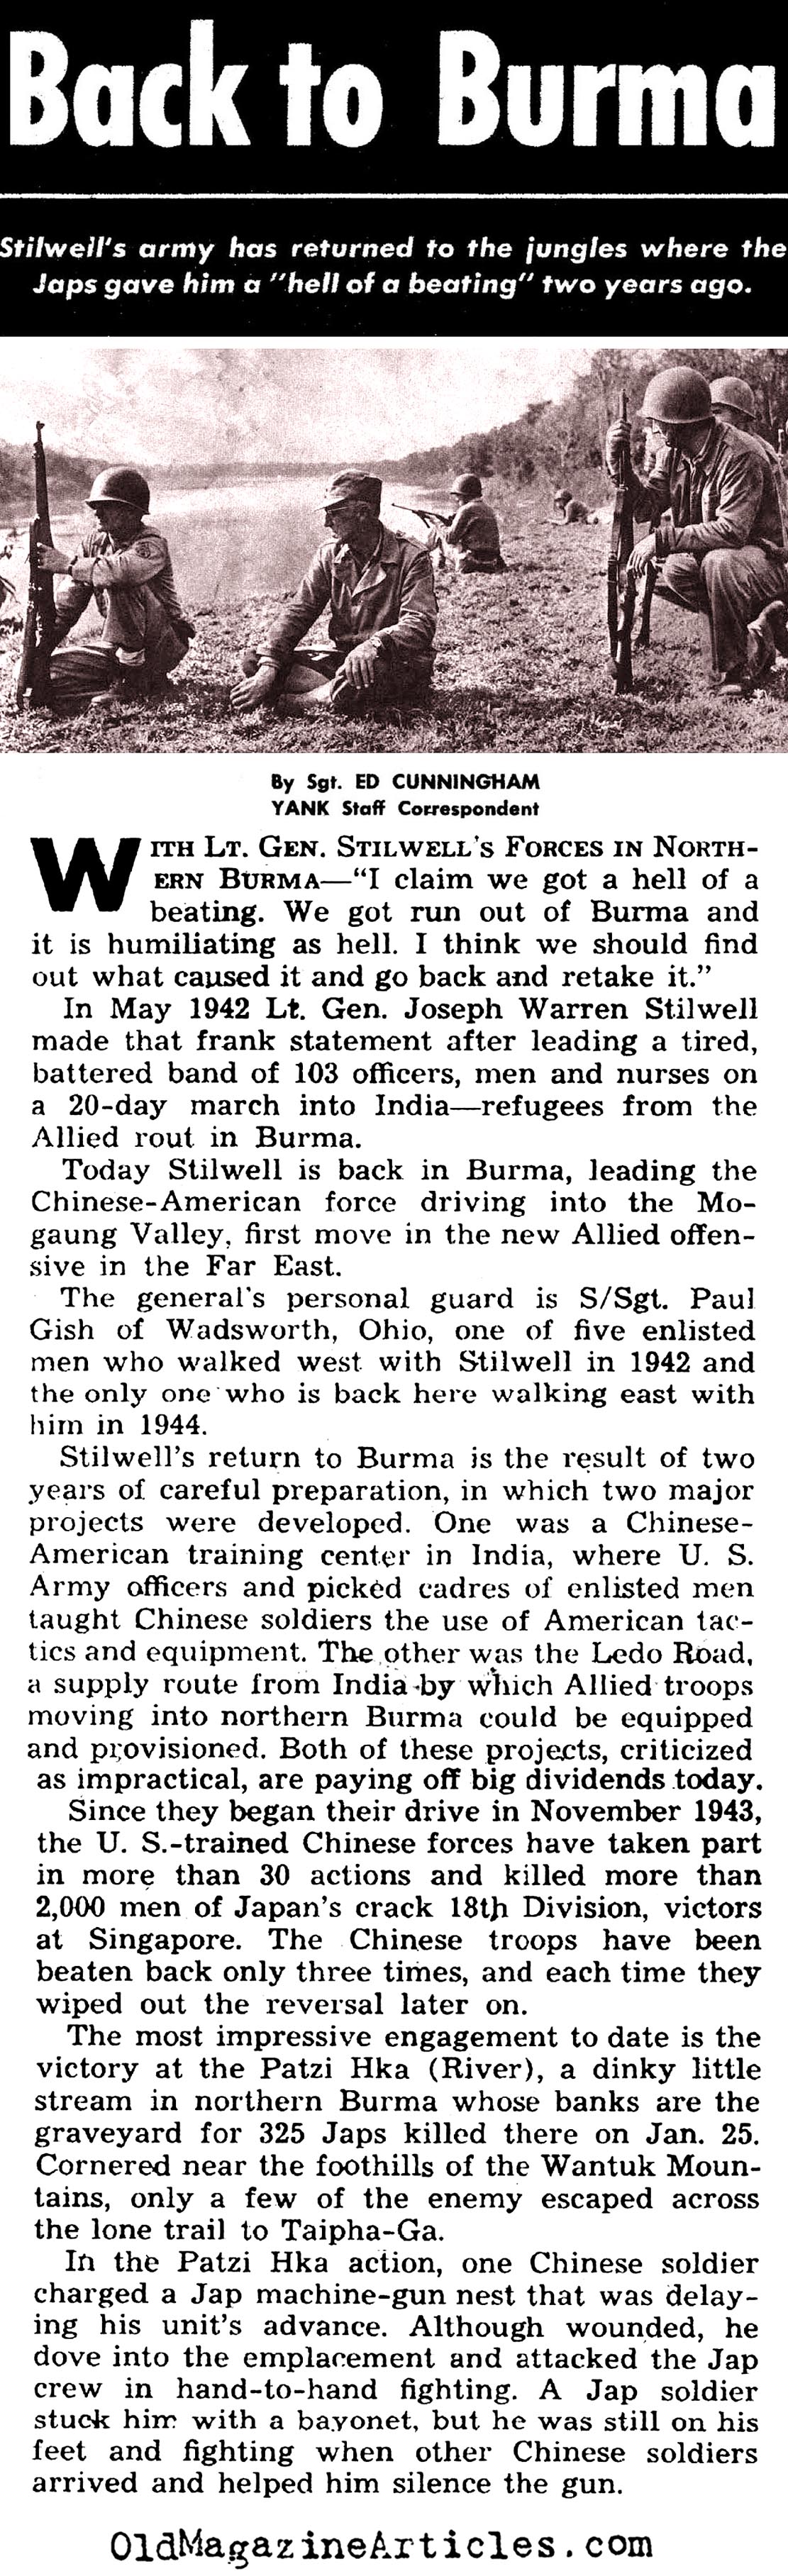 General Stilwell In Burma (Yank Magazine, 1944)